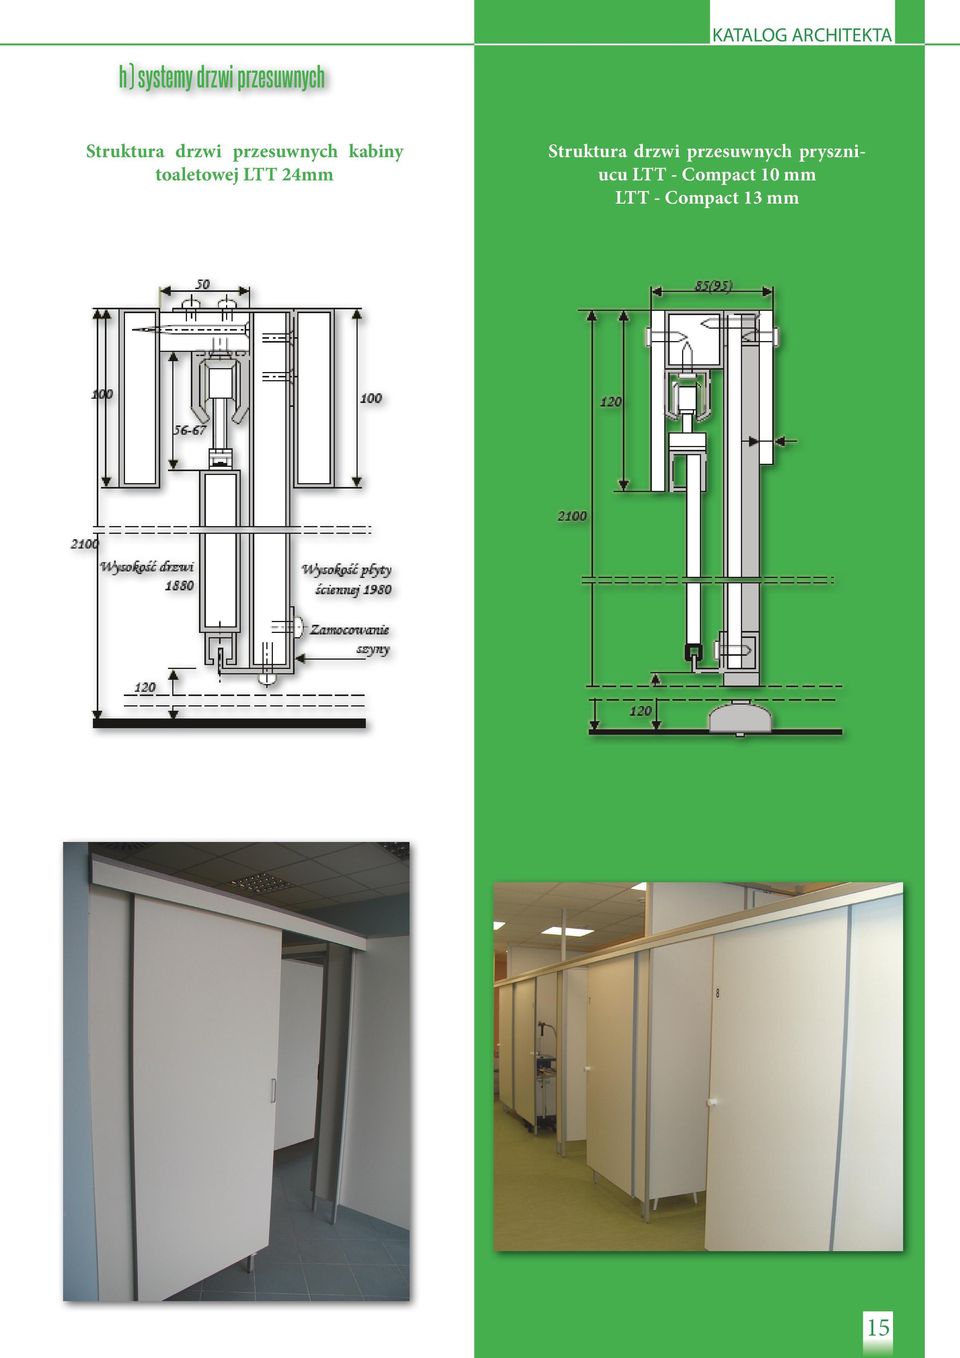 toaletowej LTT 24mm Struktura drzwi